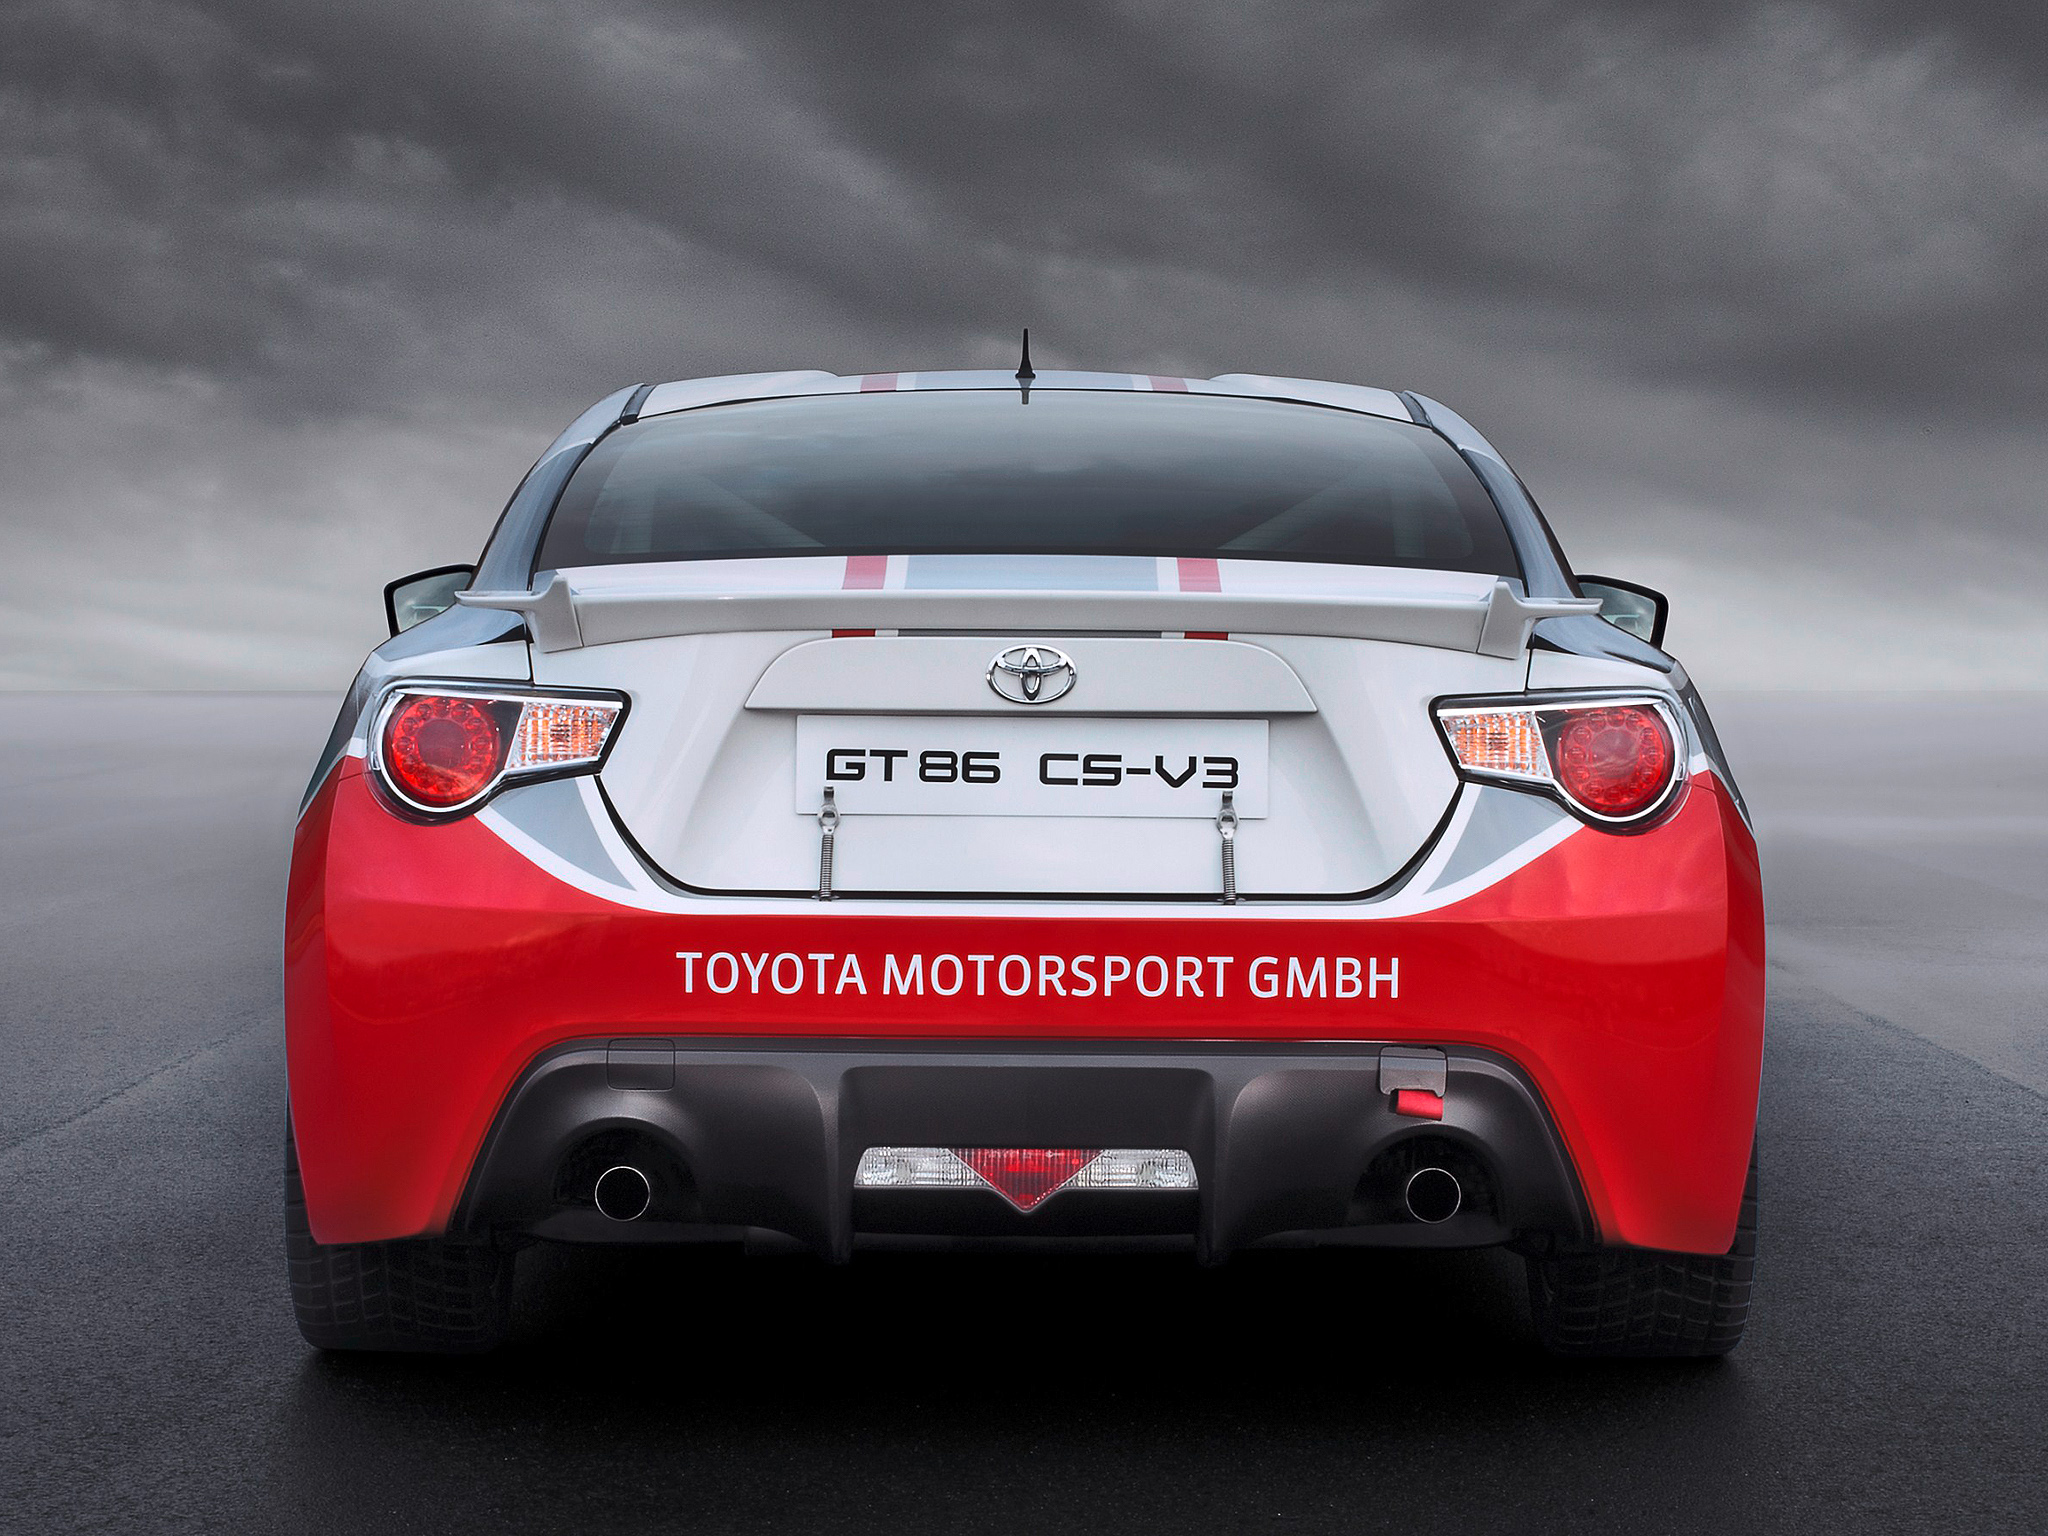 2012, Tmg, Toyota, G t, 86, Cs v3, Tuning, Race, Racing, Hs Wallpaper